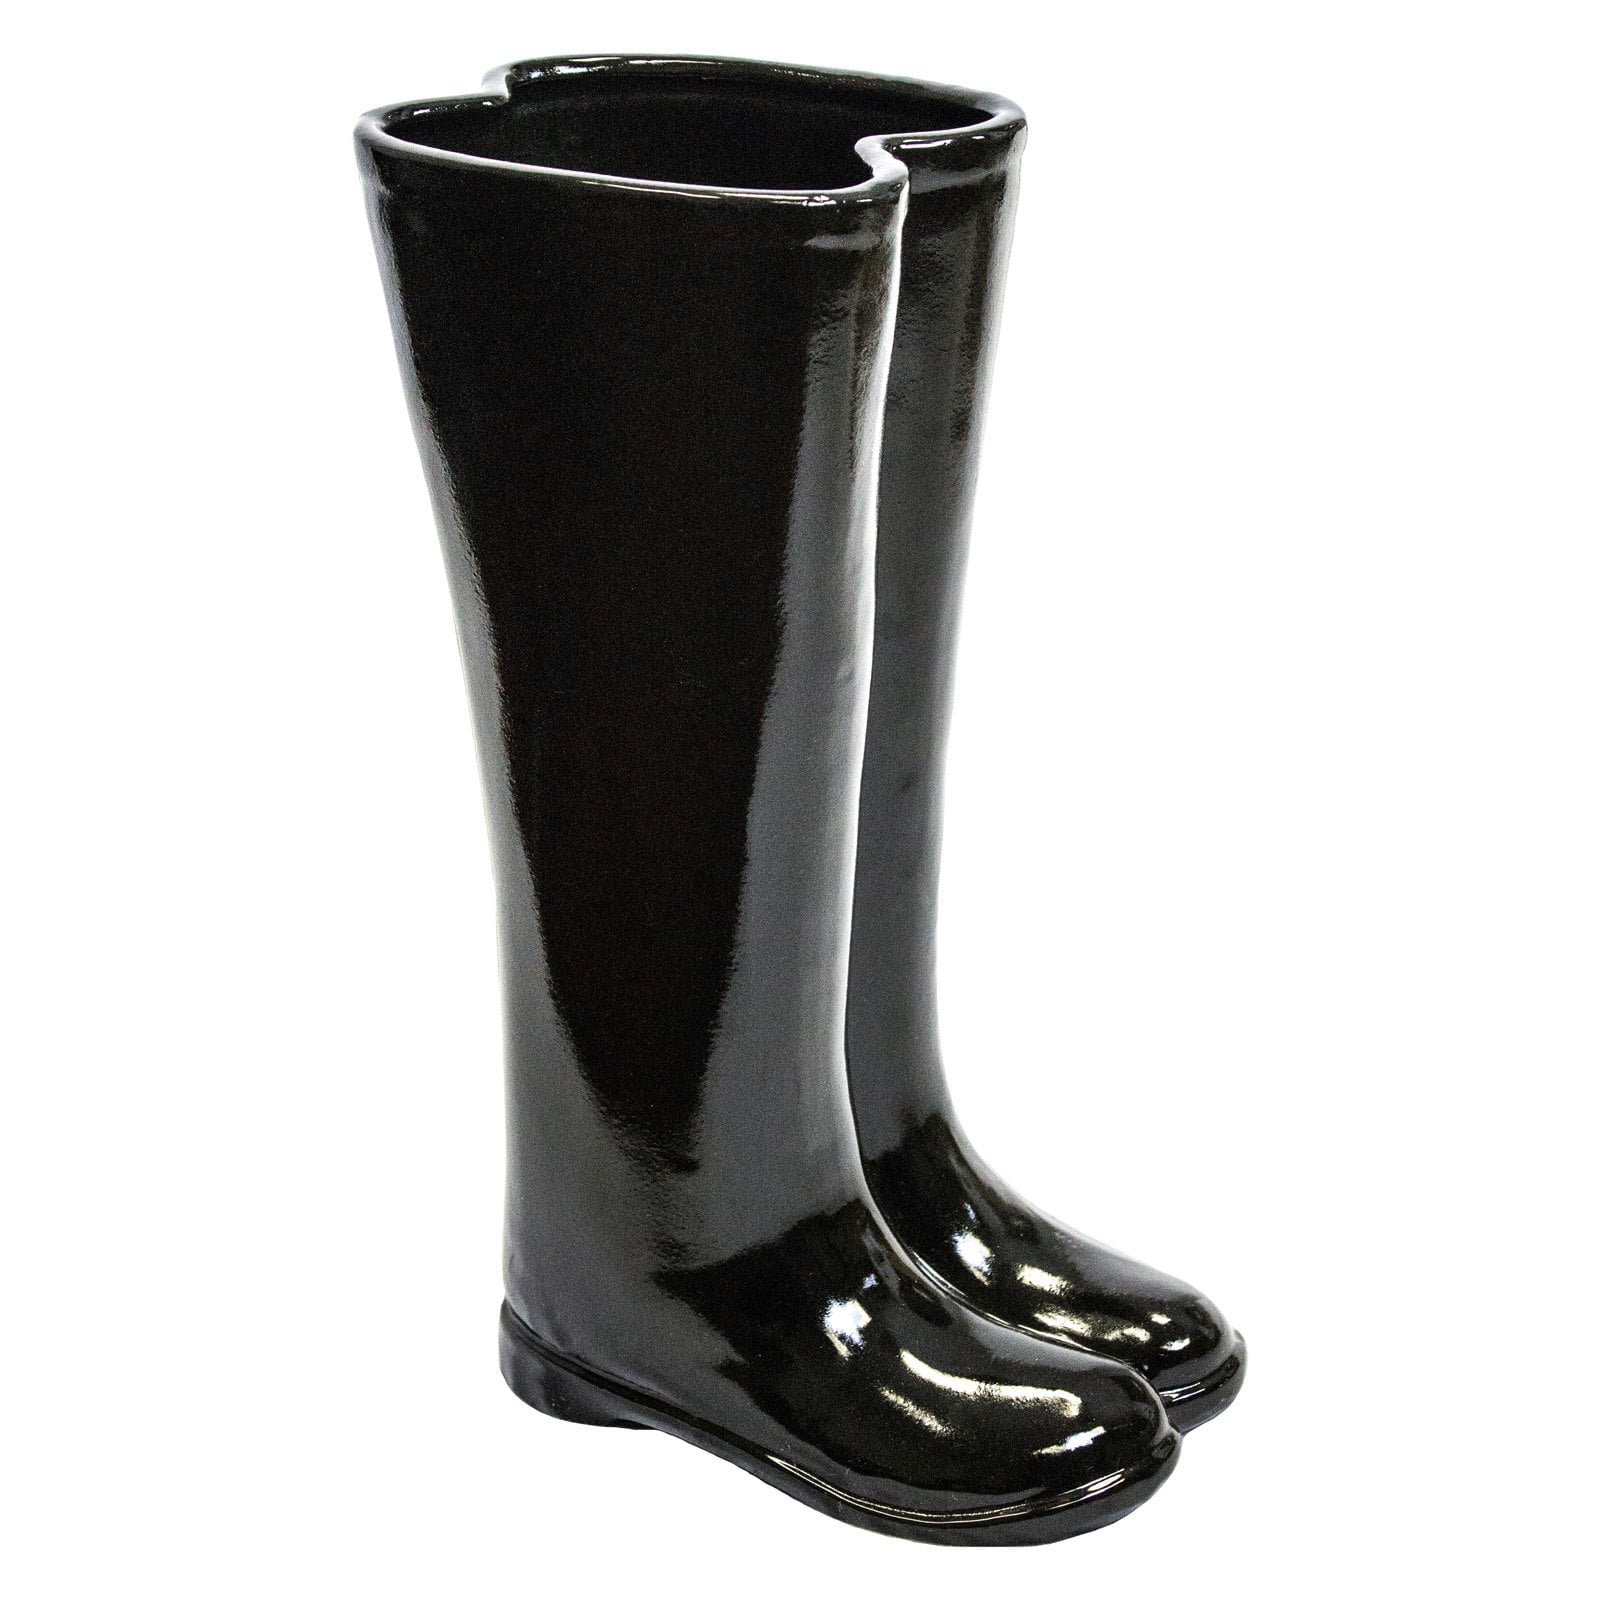 Umbrella Boot Stand Discount, SAVE 32%